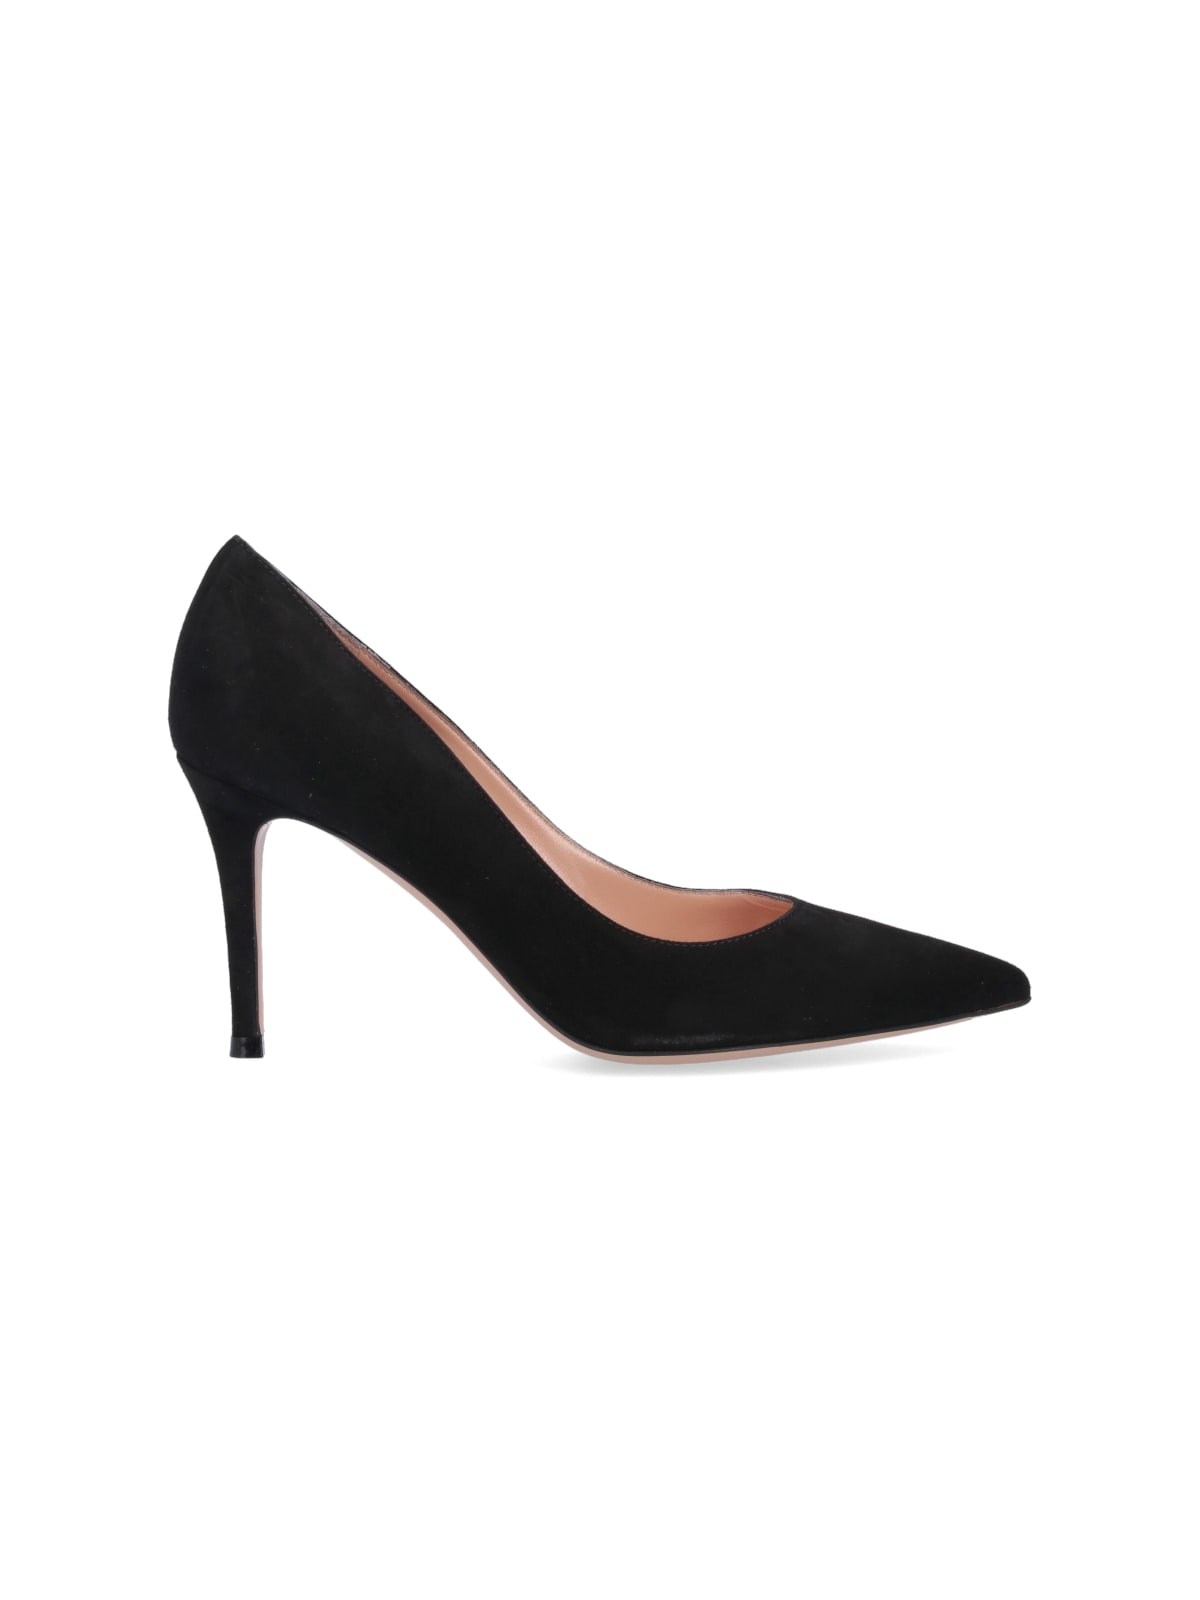 gianvito rossi high-heeled shoe